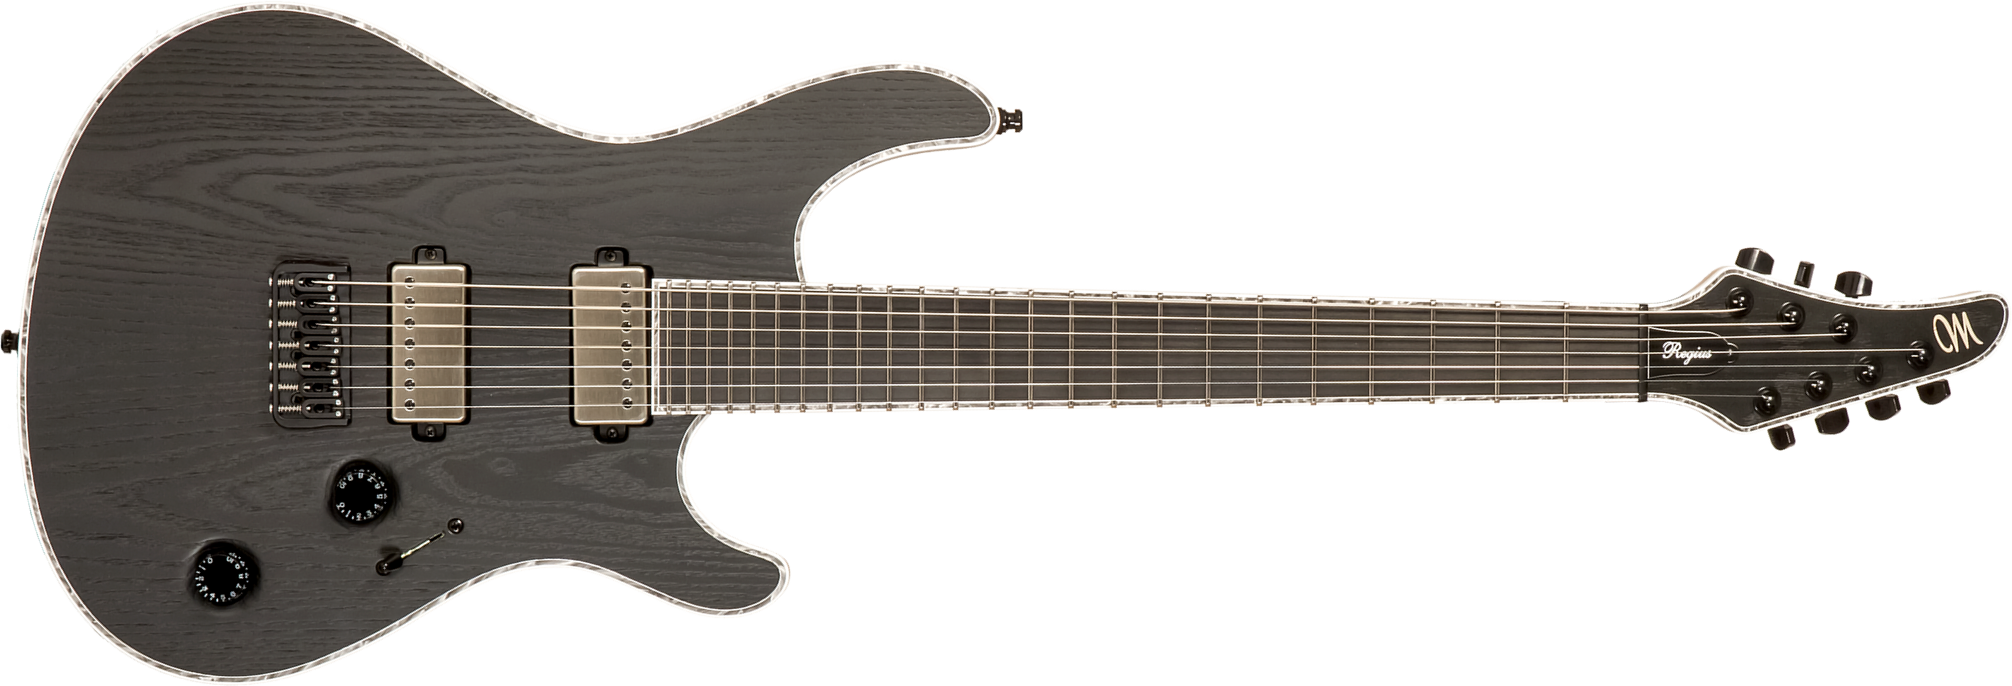 Mayones Guitars Regius Gothic Ash 7c 2h Bkp Ht Eb #rf2312801 - Gothic Black Ash - 7 string electric guitar - Main picture